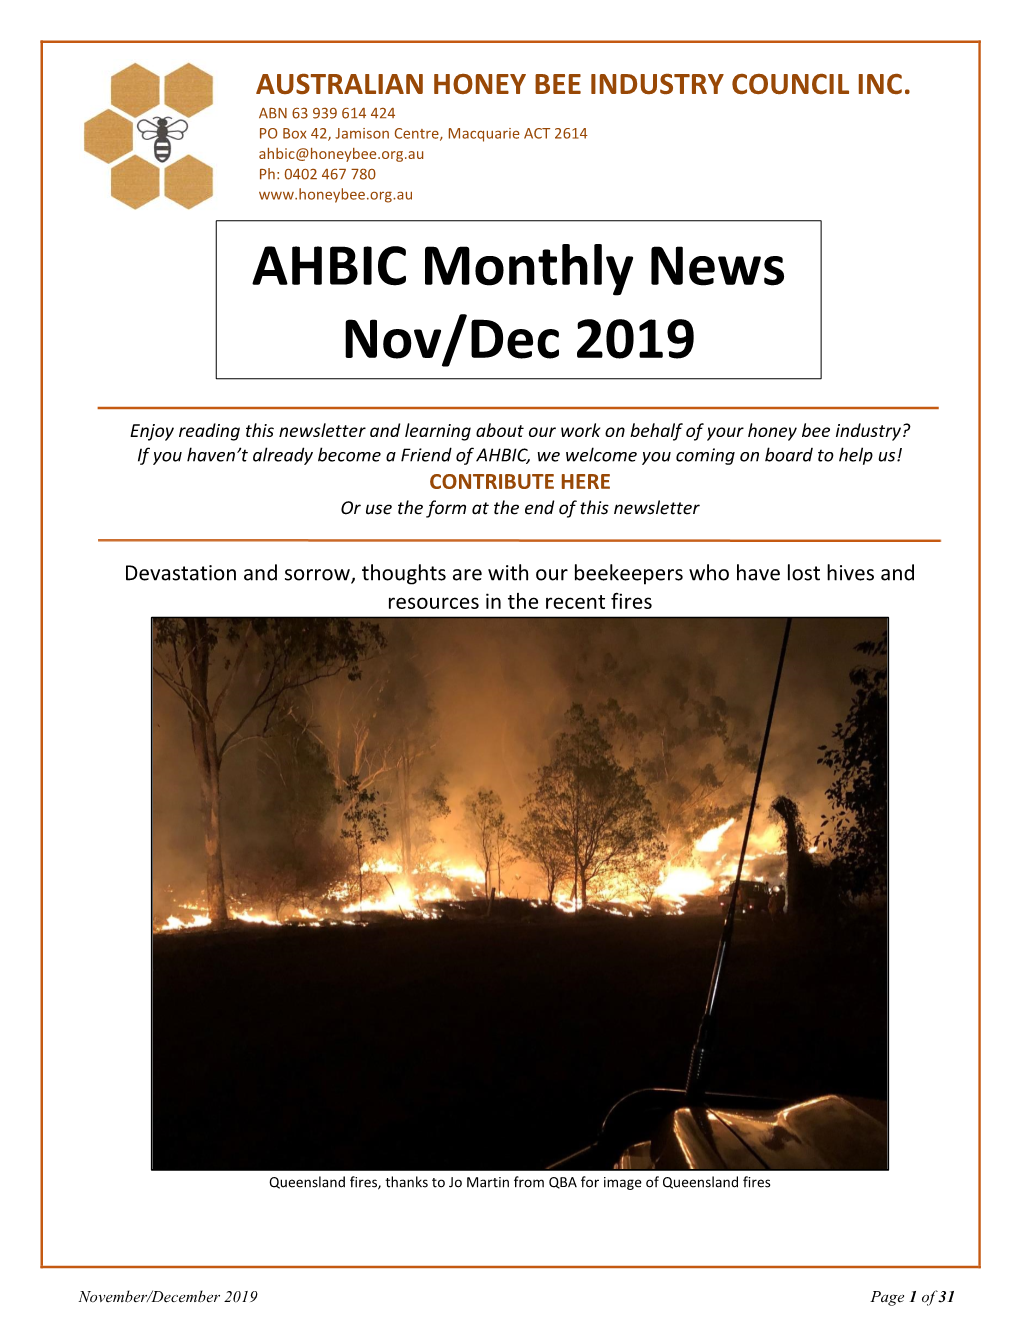 AHBIC Monthly News Nov/Dec 2019